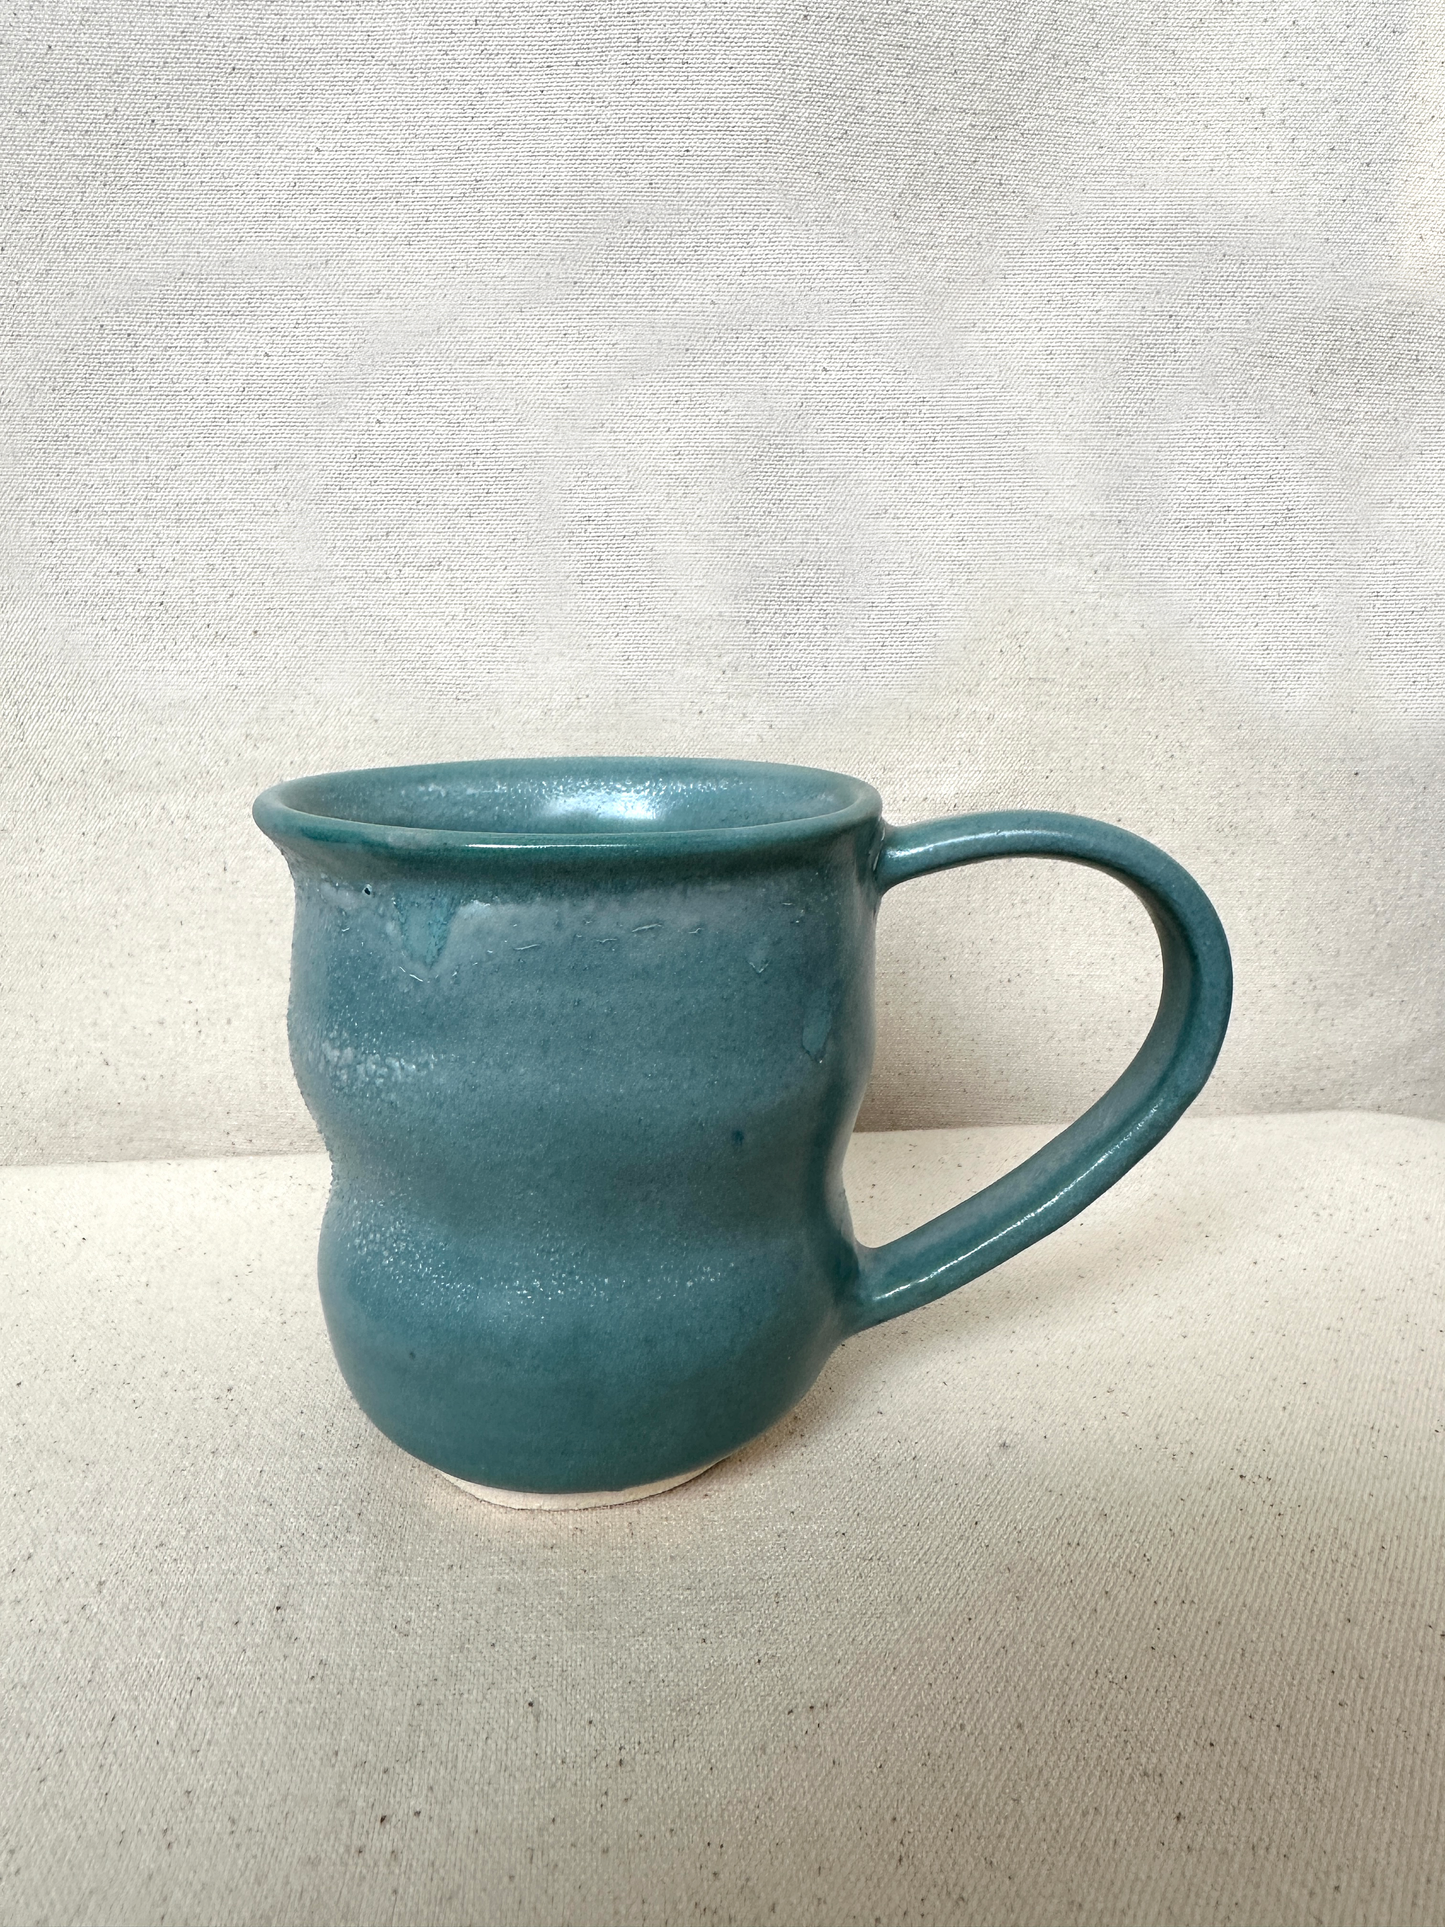 Aqua Blue "Fill Your Cup" Coffee Mug